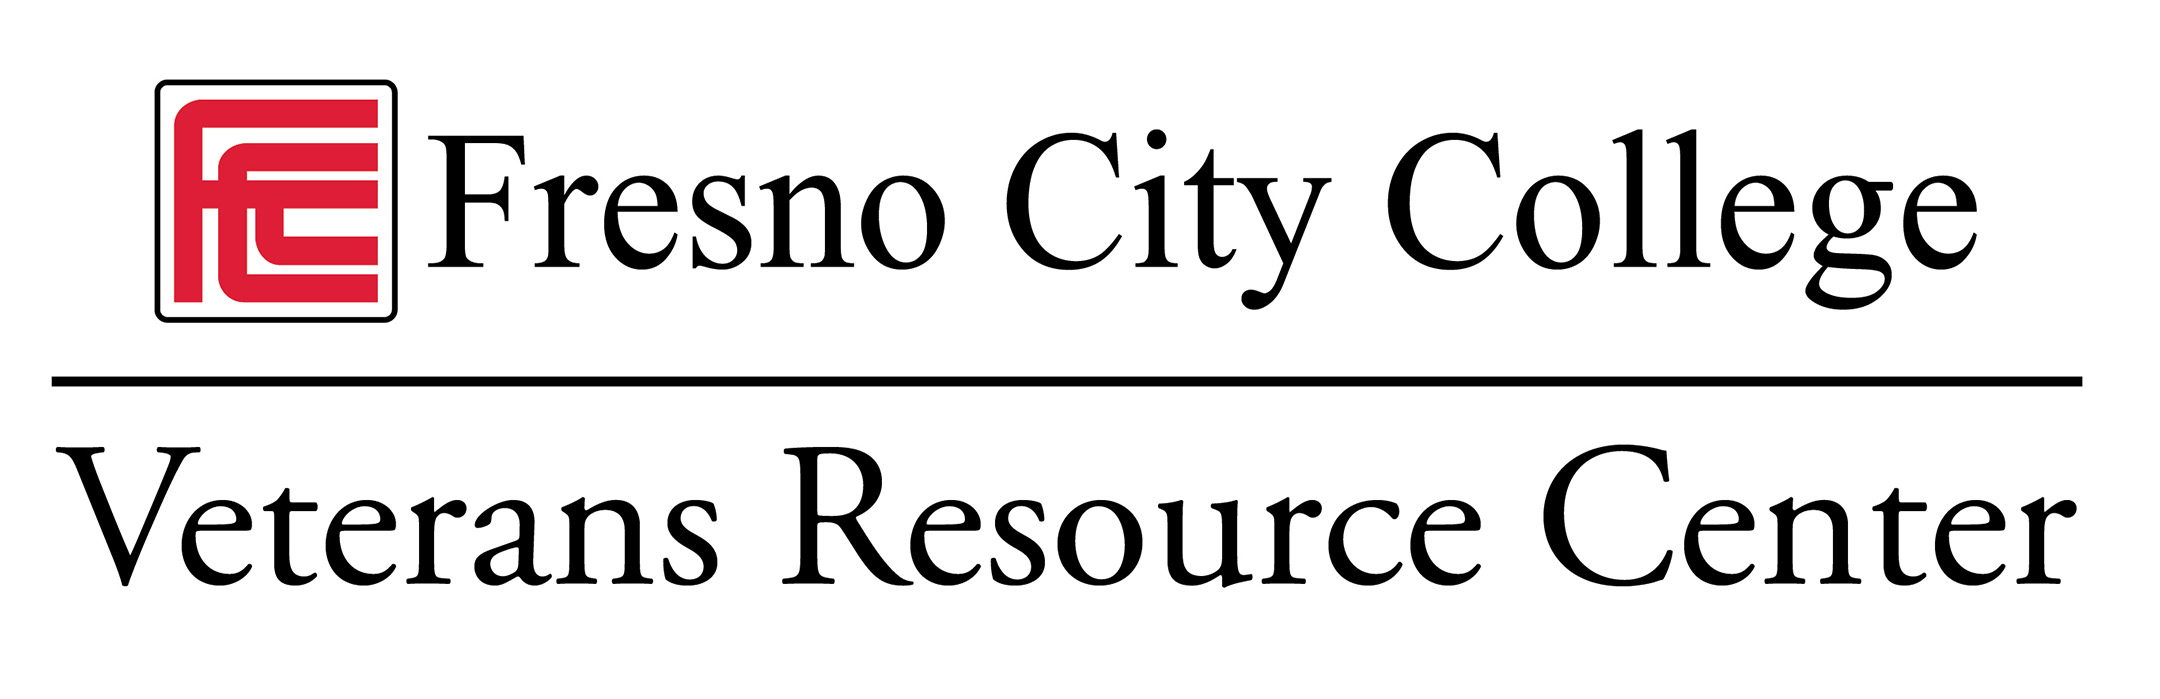 Fresno City College Veterans Resource Center Department Graphic